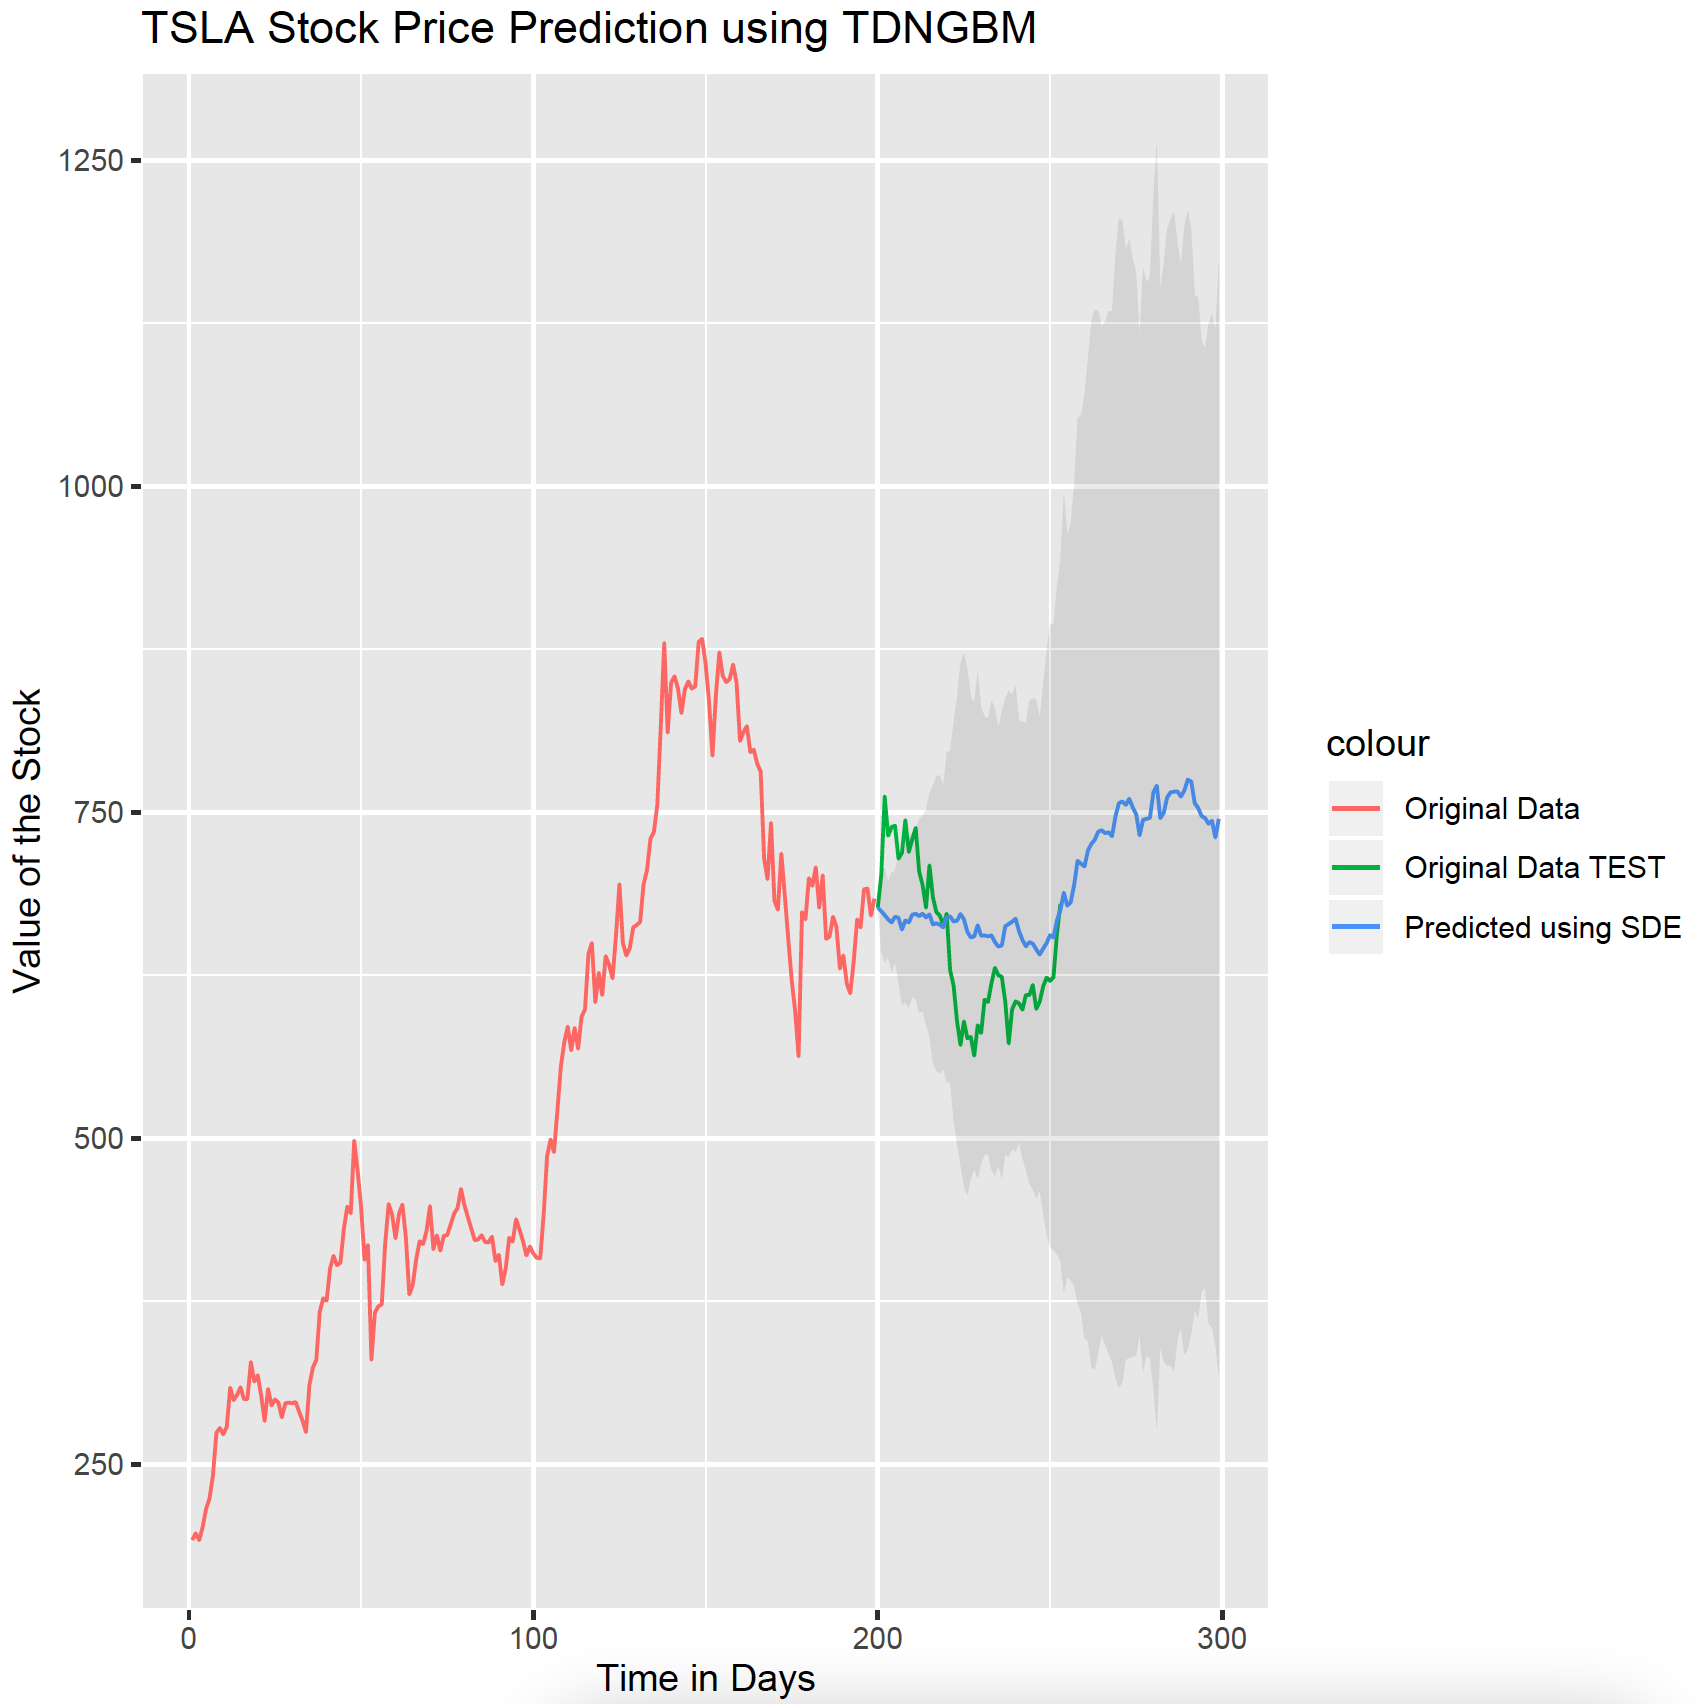 TDNGBM Predictions for Tesla